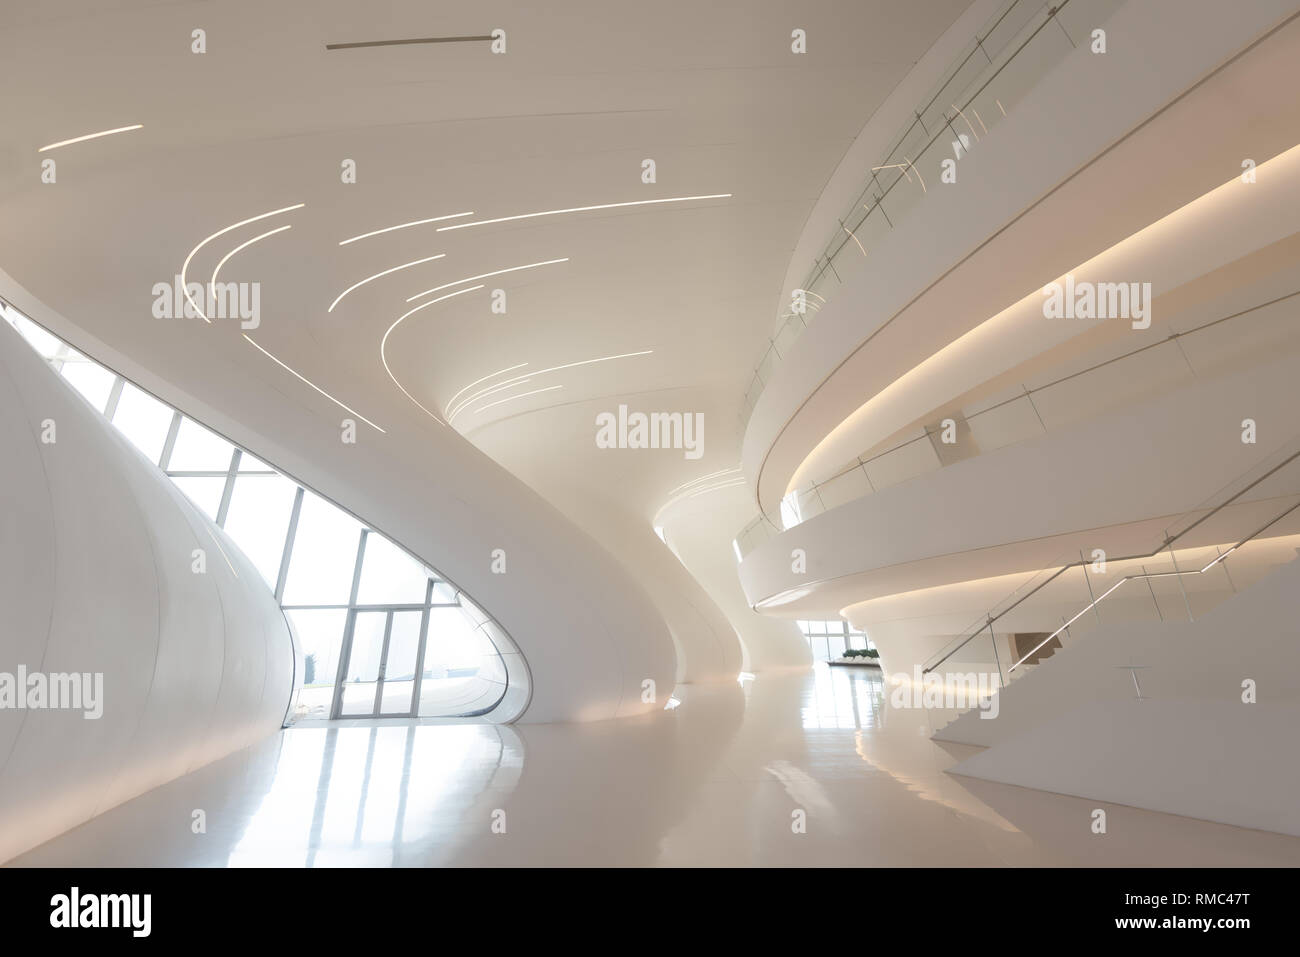 Heydar Aliyev Center Architecture in Baku, Azerbaijan taken in January 2019 Stock Photo